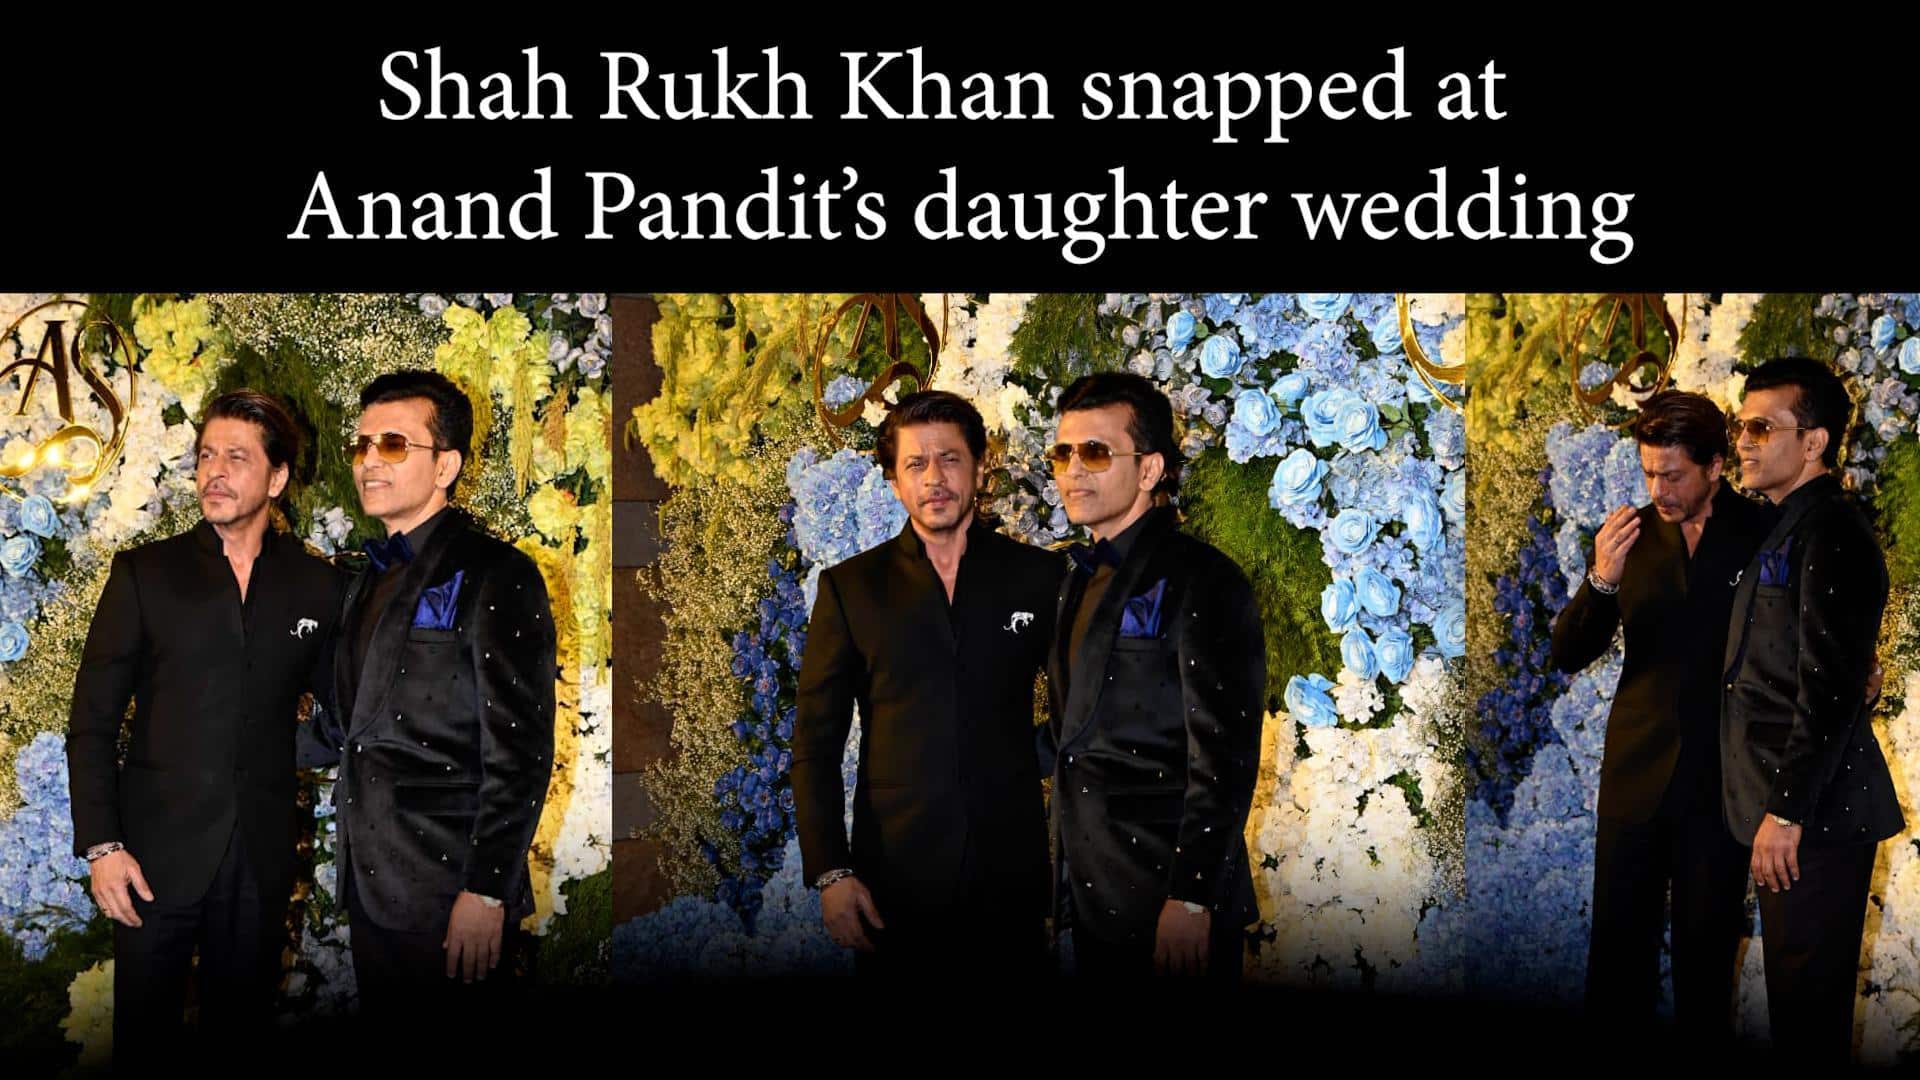 Shah Rukh Khan honore le mariage de sa fille Anant Pandit avec style [Video]